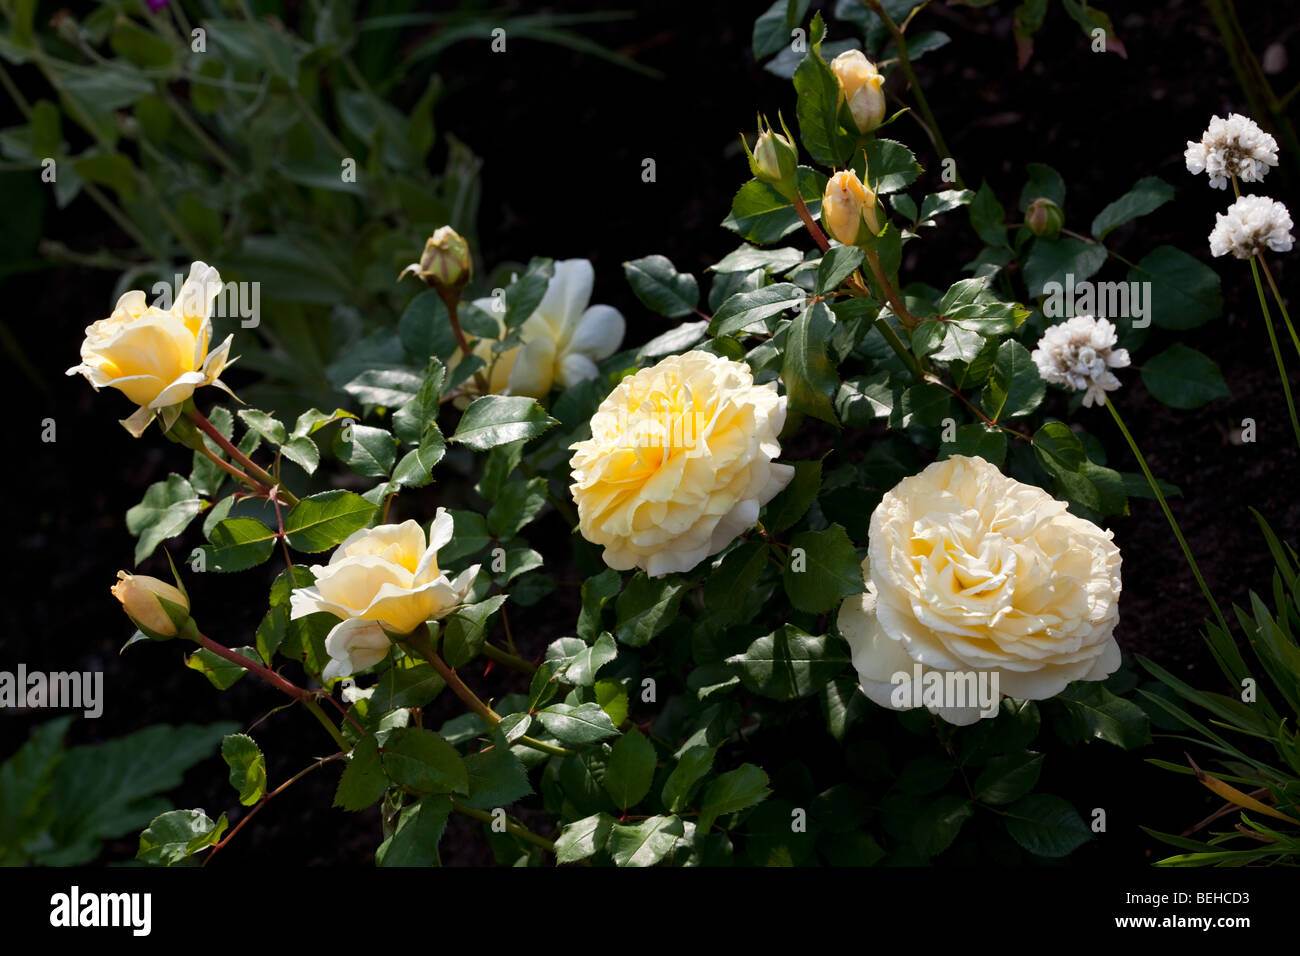 Stockholm' Floribunda Rose, Floribundaros (Rosa Stock Photo - Alamy